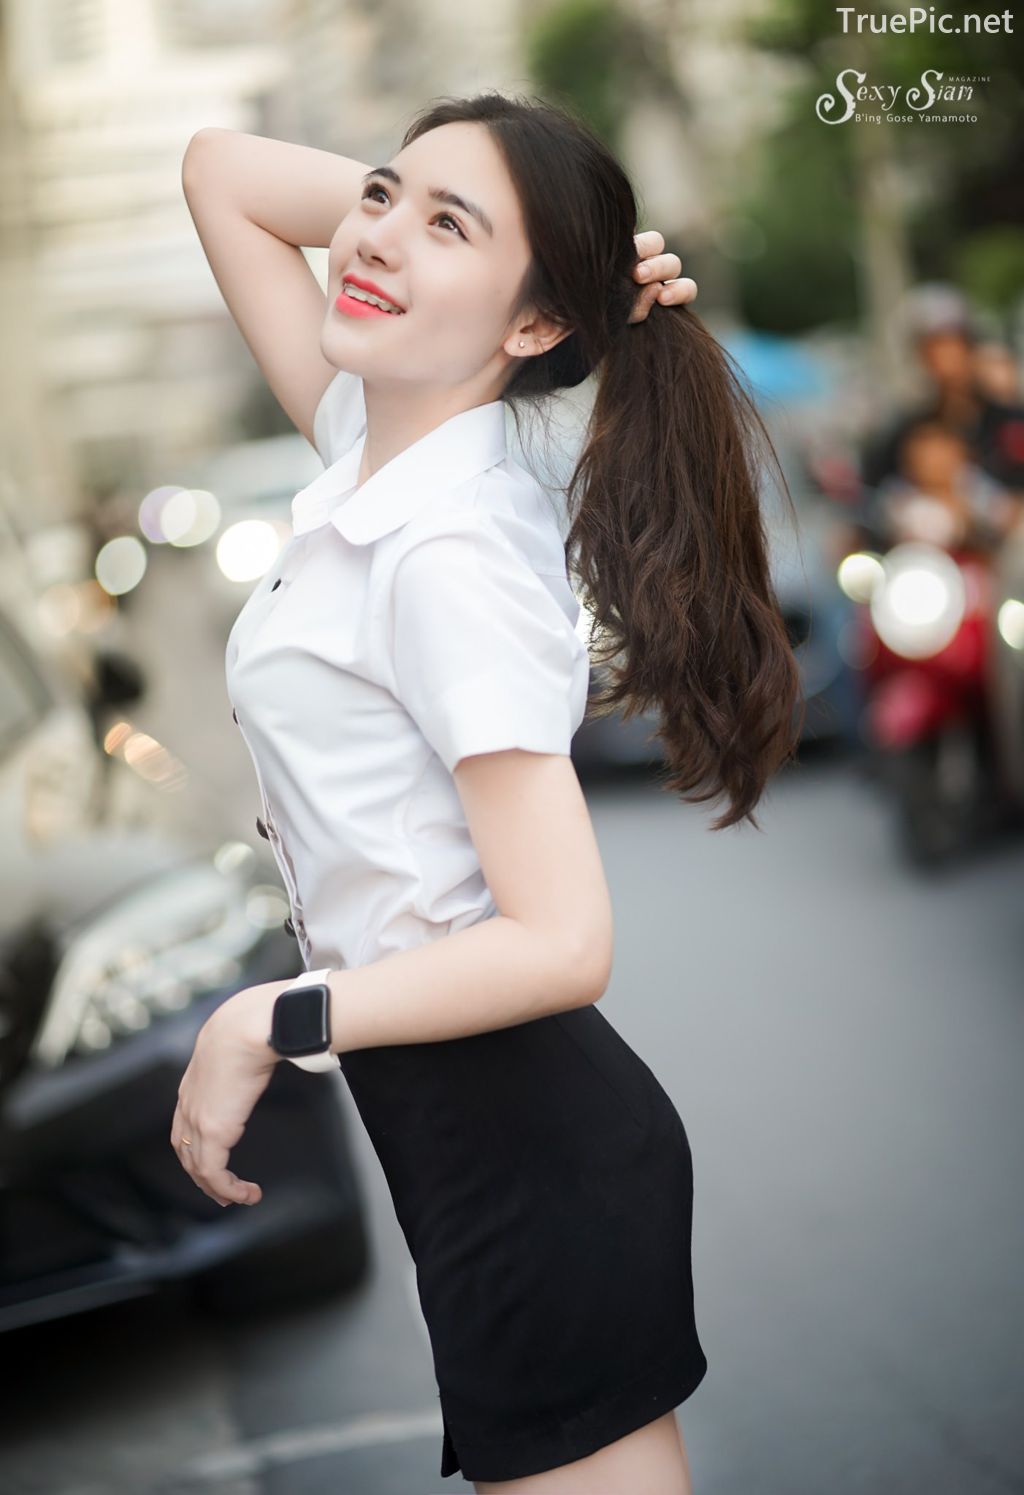 Thailand beautiful girl - Chonticha Chalimewong - Thai Girl Student uniform - TruePic.net - Picture 16